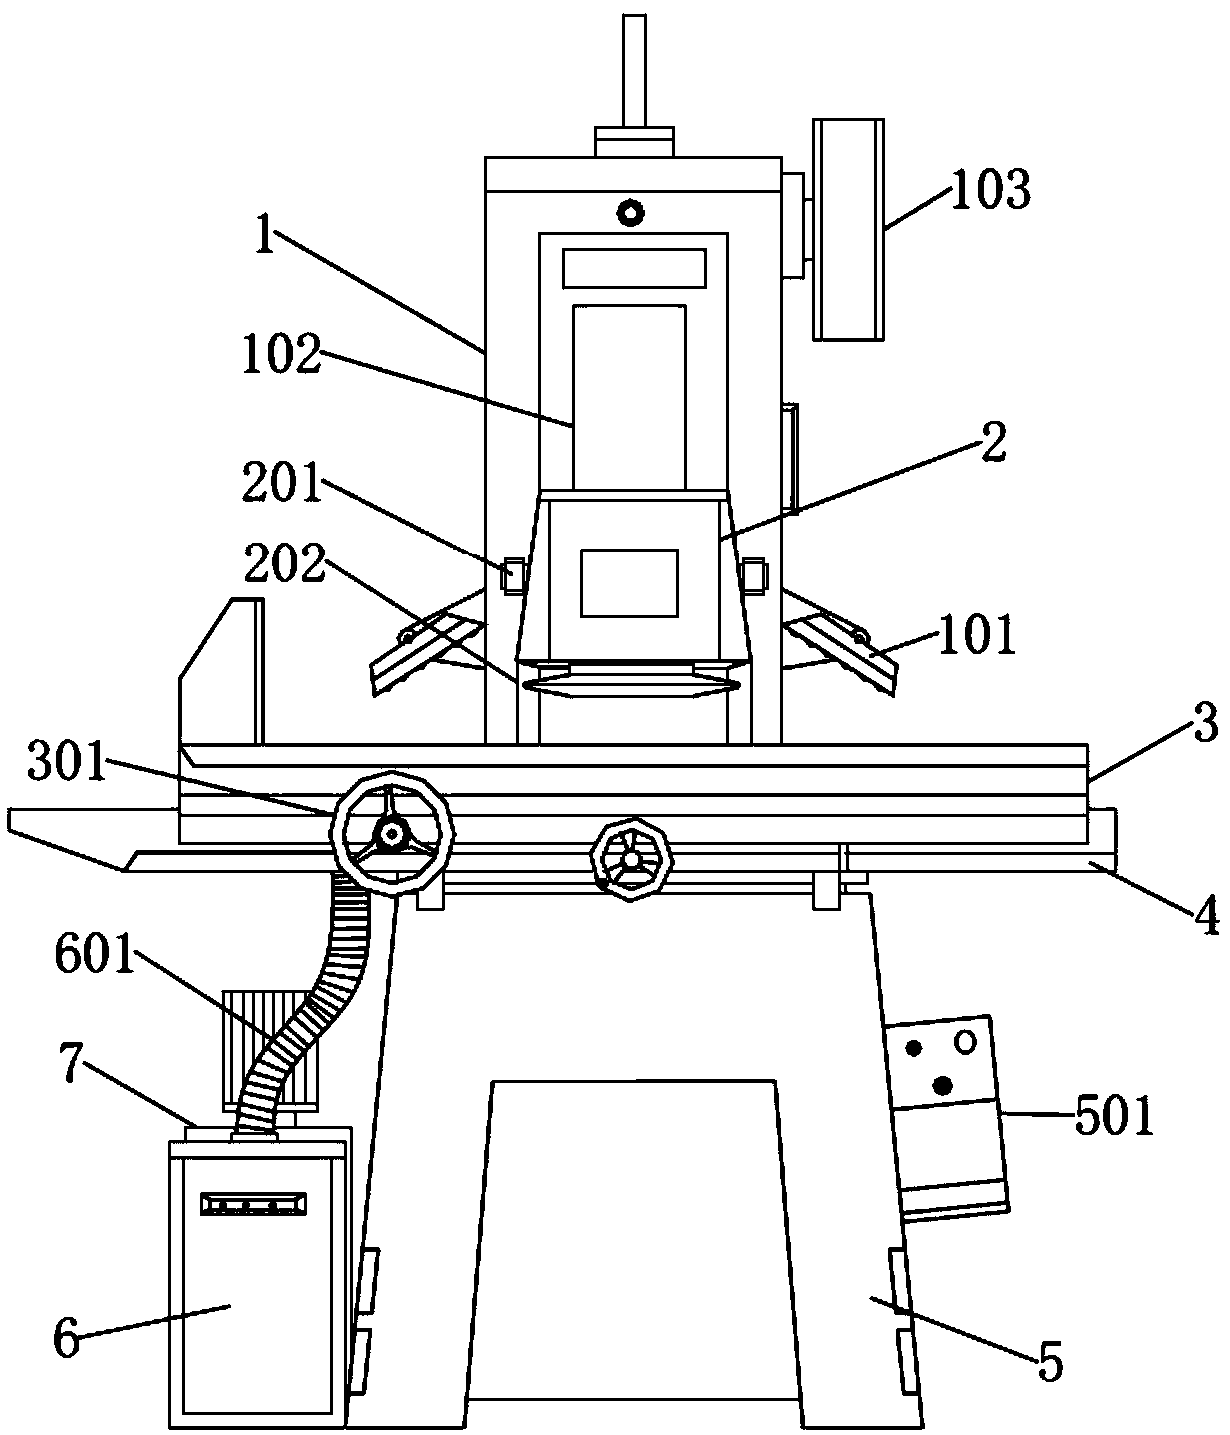 Dual-purpose grinding machine